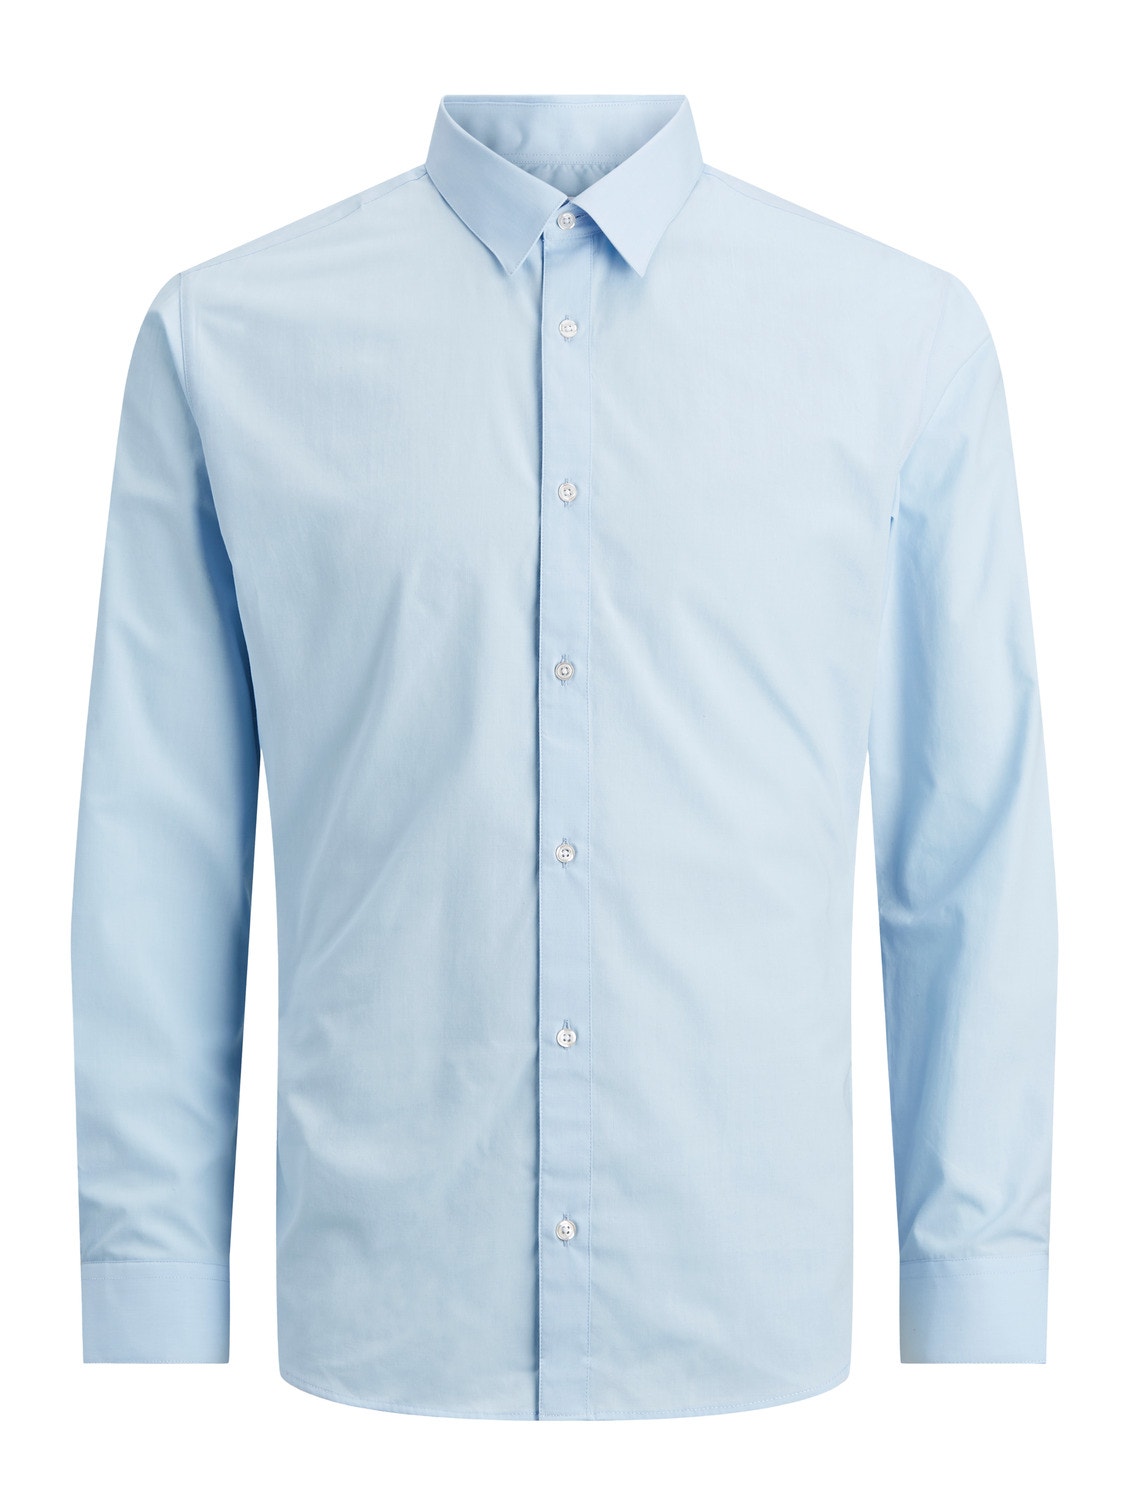 Jack & Jones Oficialūs marškiniai For boys -Cashmere Blue - 12223343